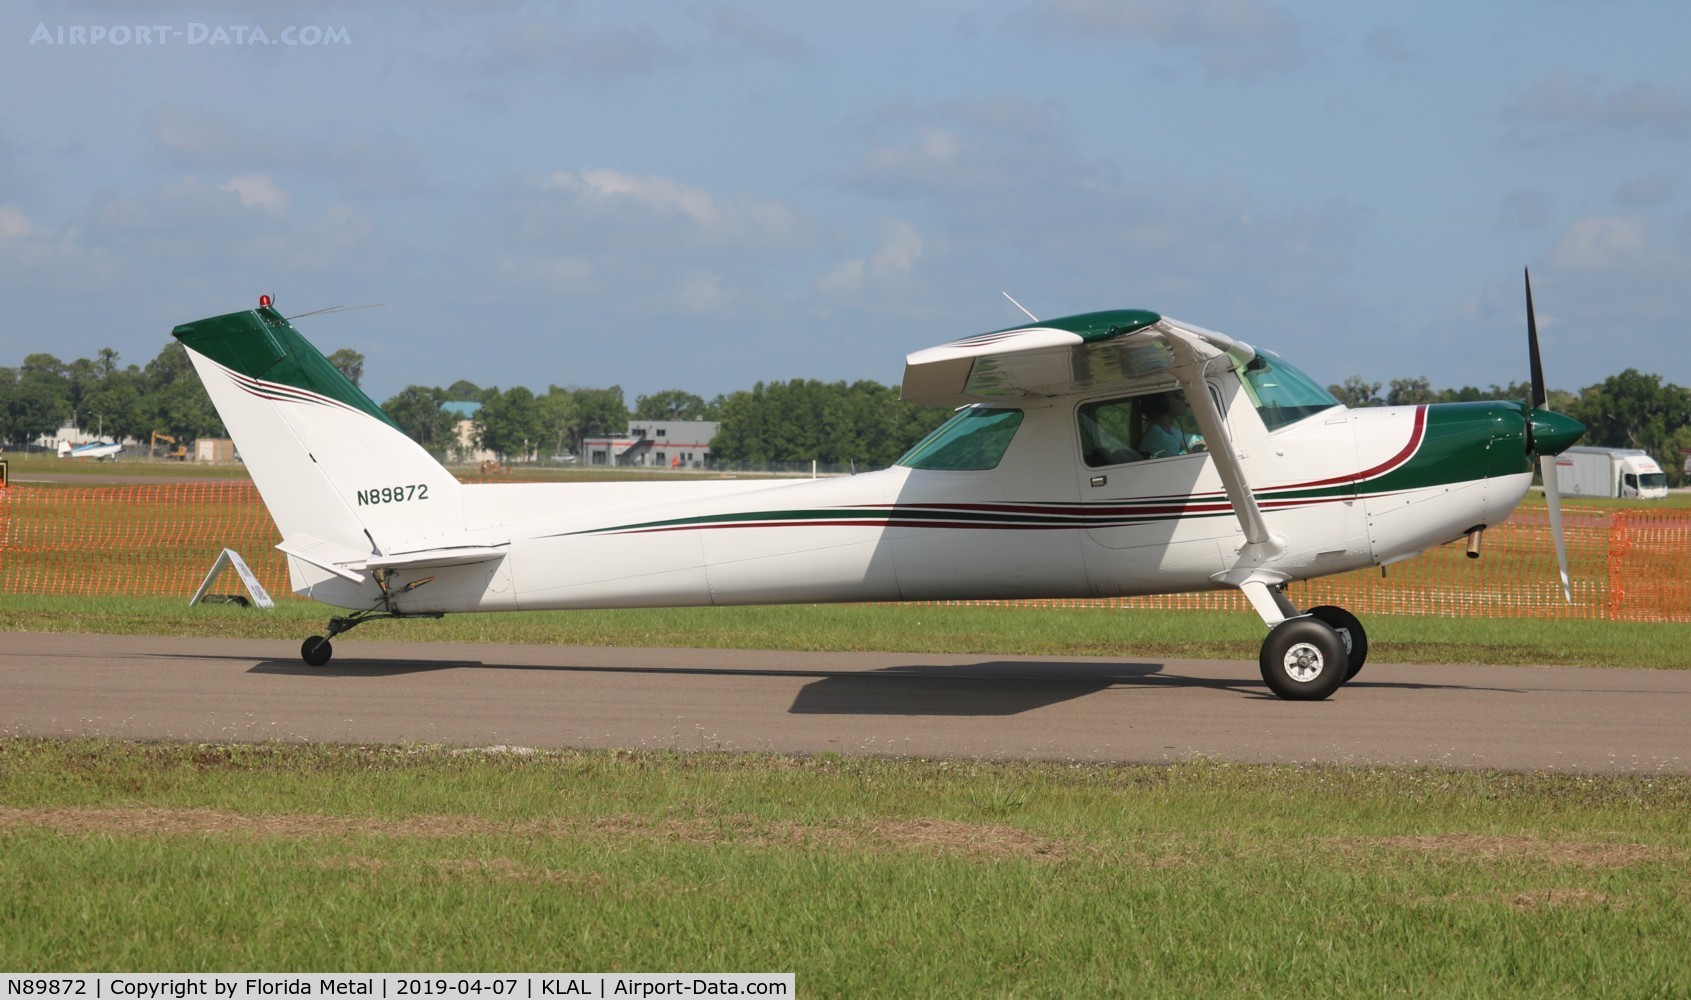 N89872, 1979 Cessna 152 C/N 15282898, Cessna 152 tailwheel